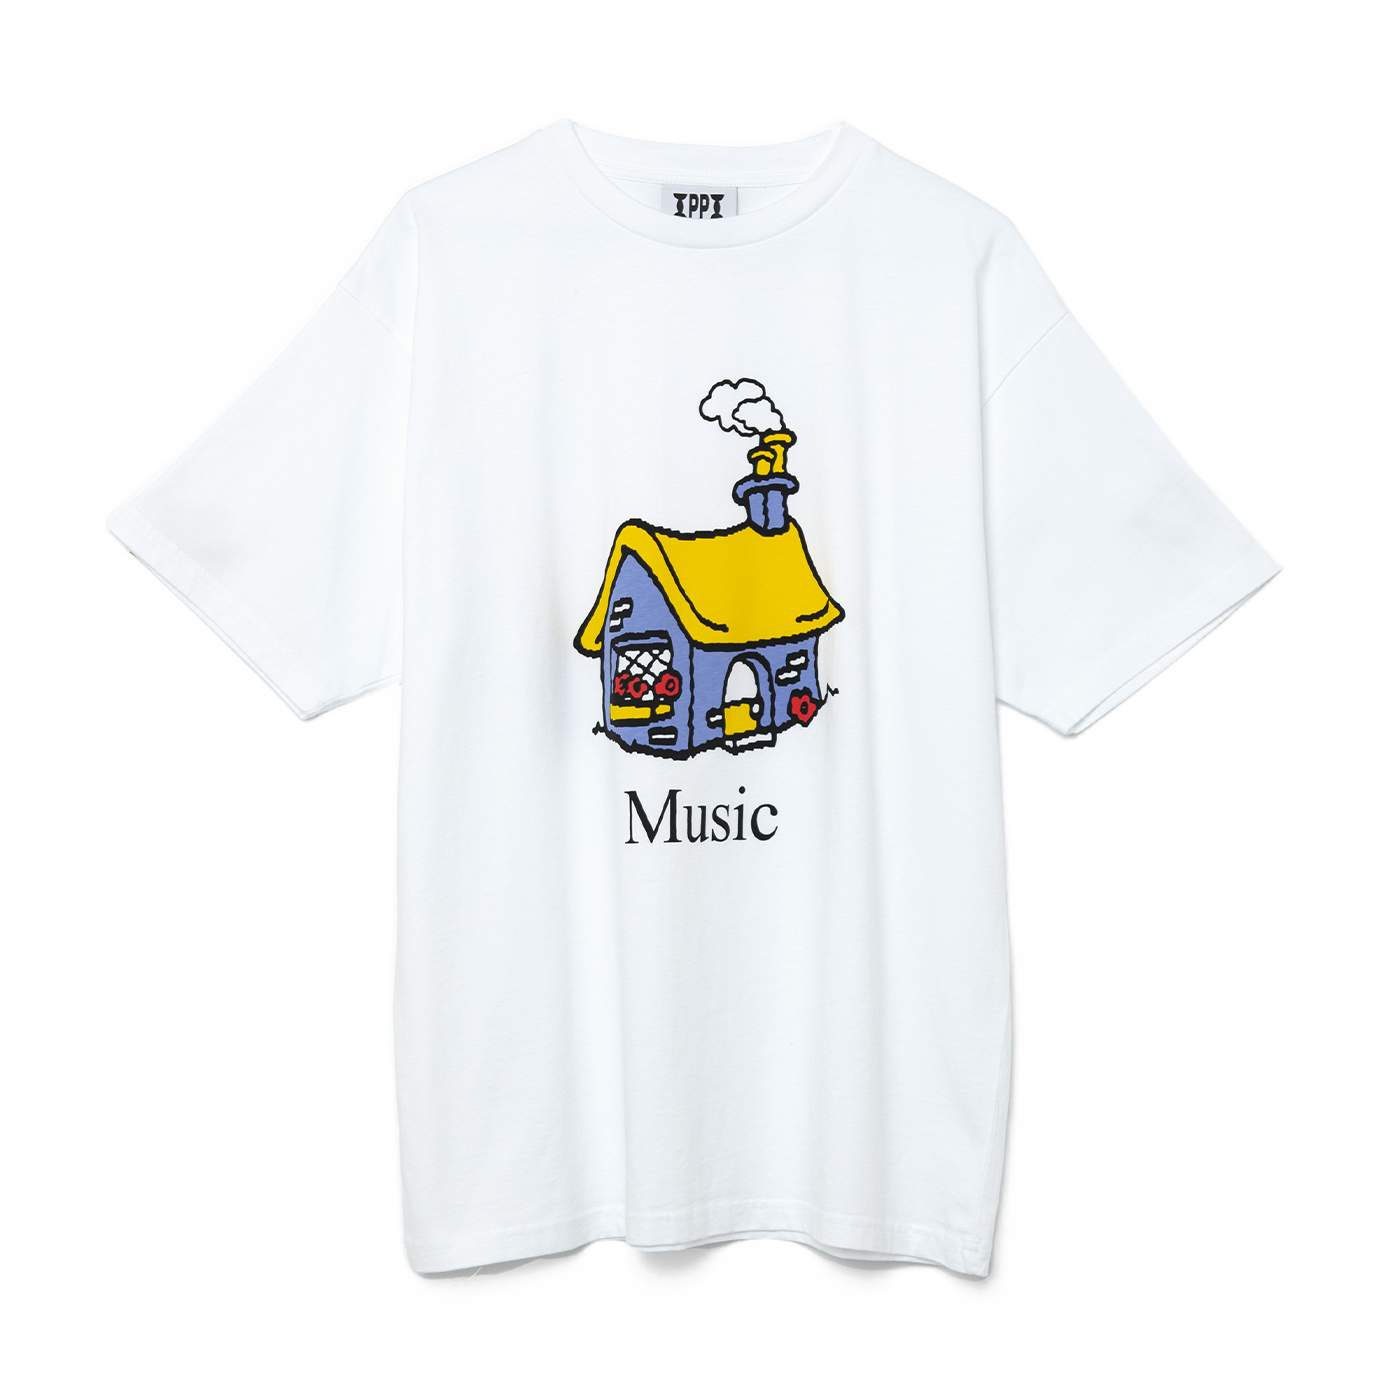 House Music T-Shirt